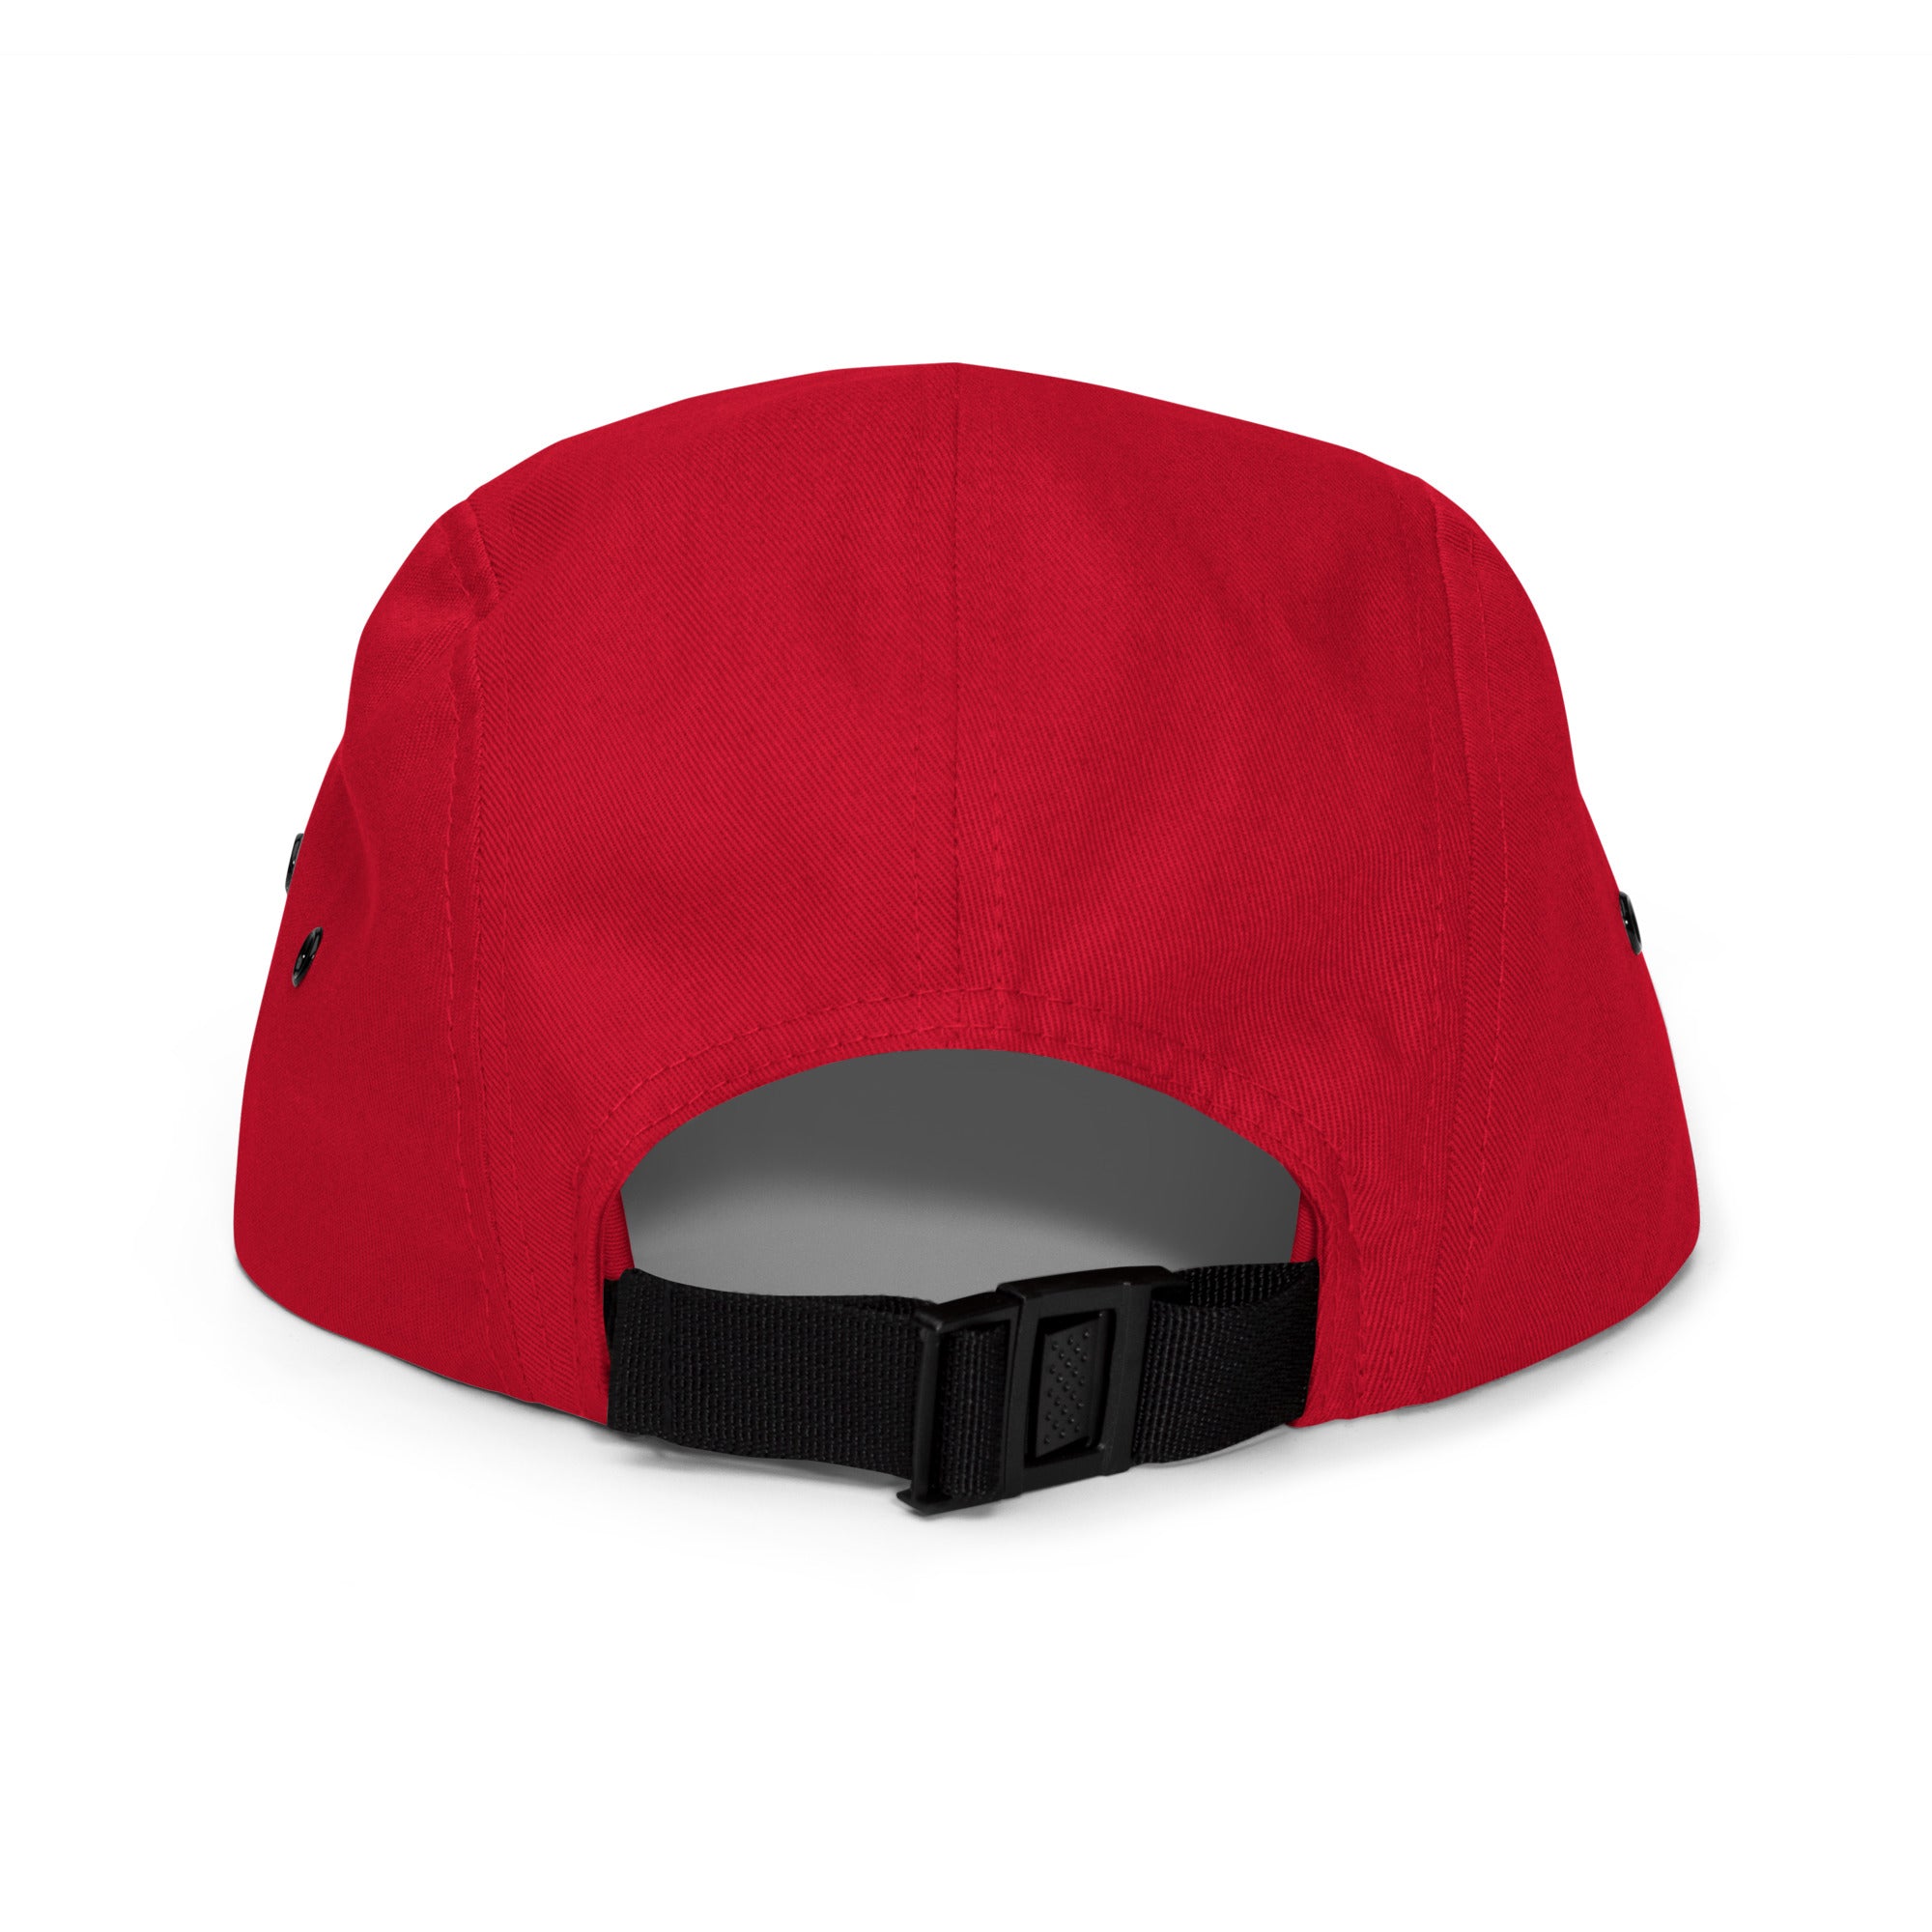 TreeBike Hat, Camper, Black